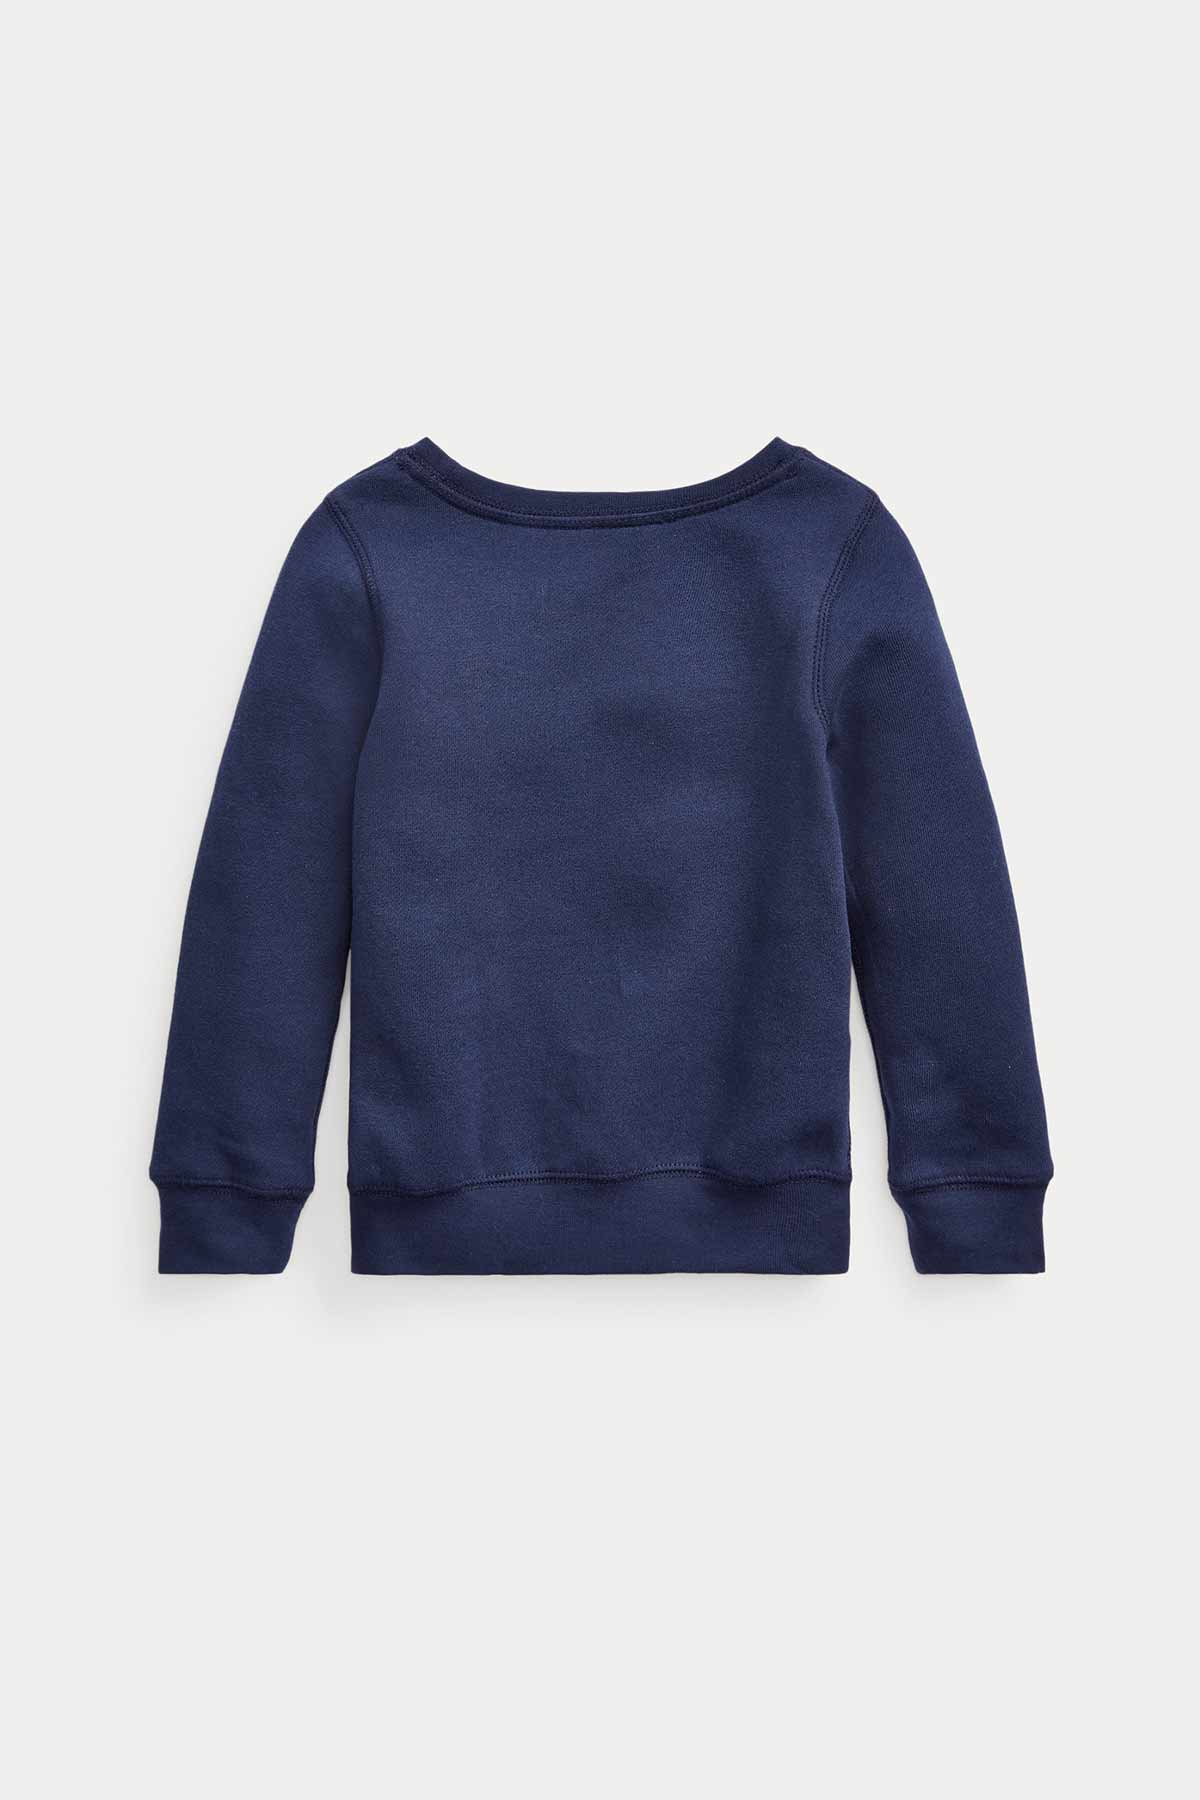 Polo Ralph Lauren 5-6.5 Yaş Kız Çocuk Polo Bear Sweatshirt-Libas Trendy Fashion Store